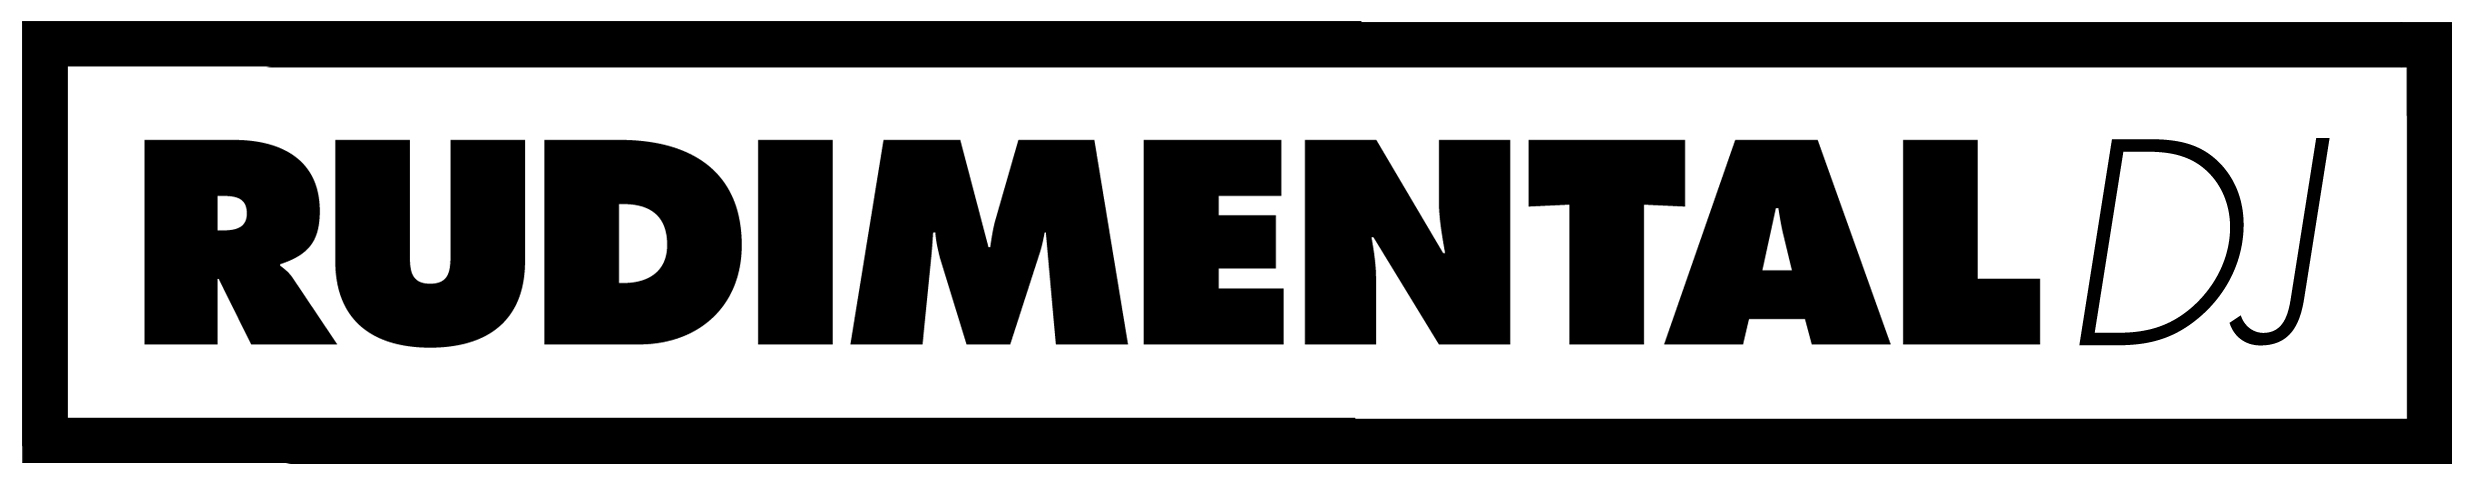 Image of Rudimental DJ logo